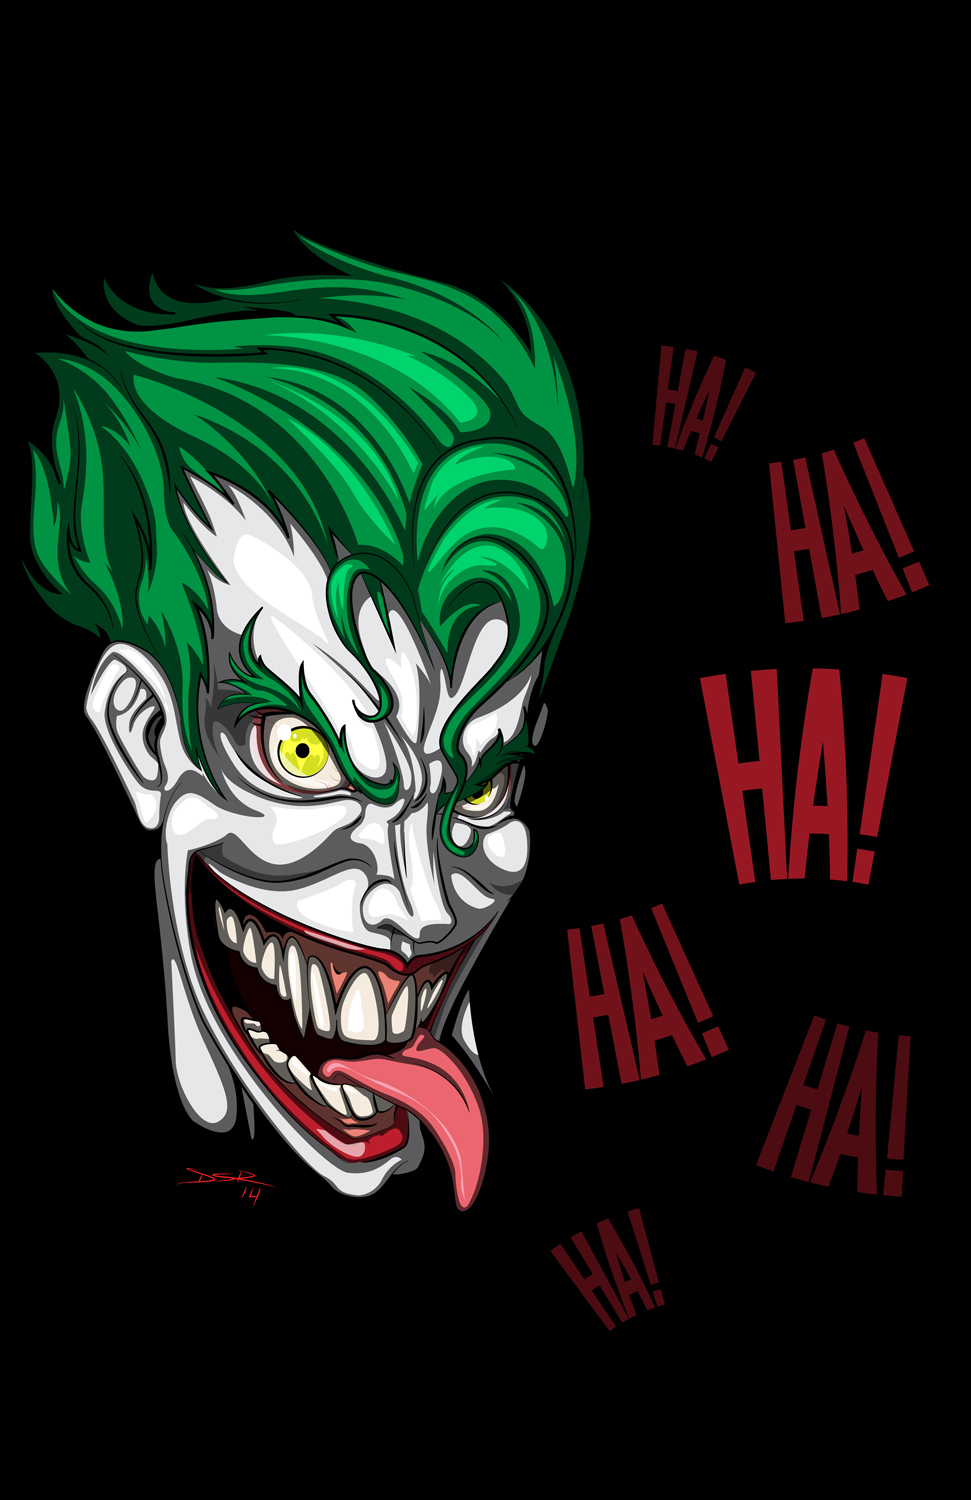 Joker Face by thek0n on DeviantArt